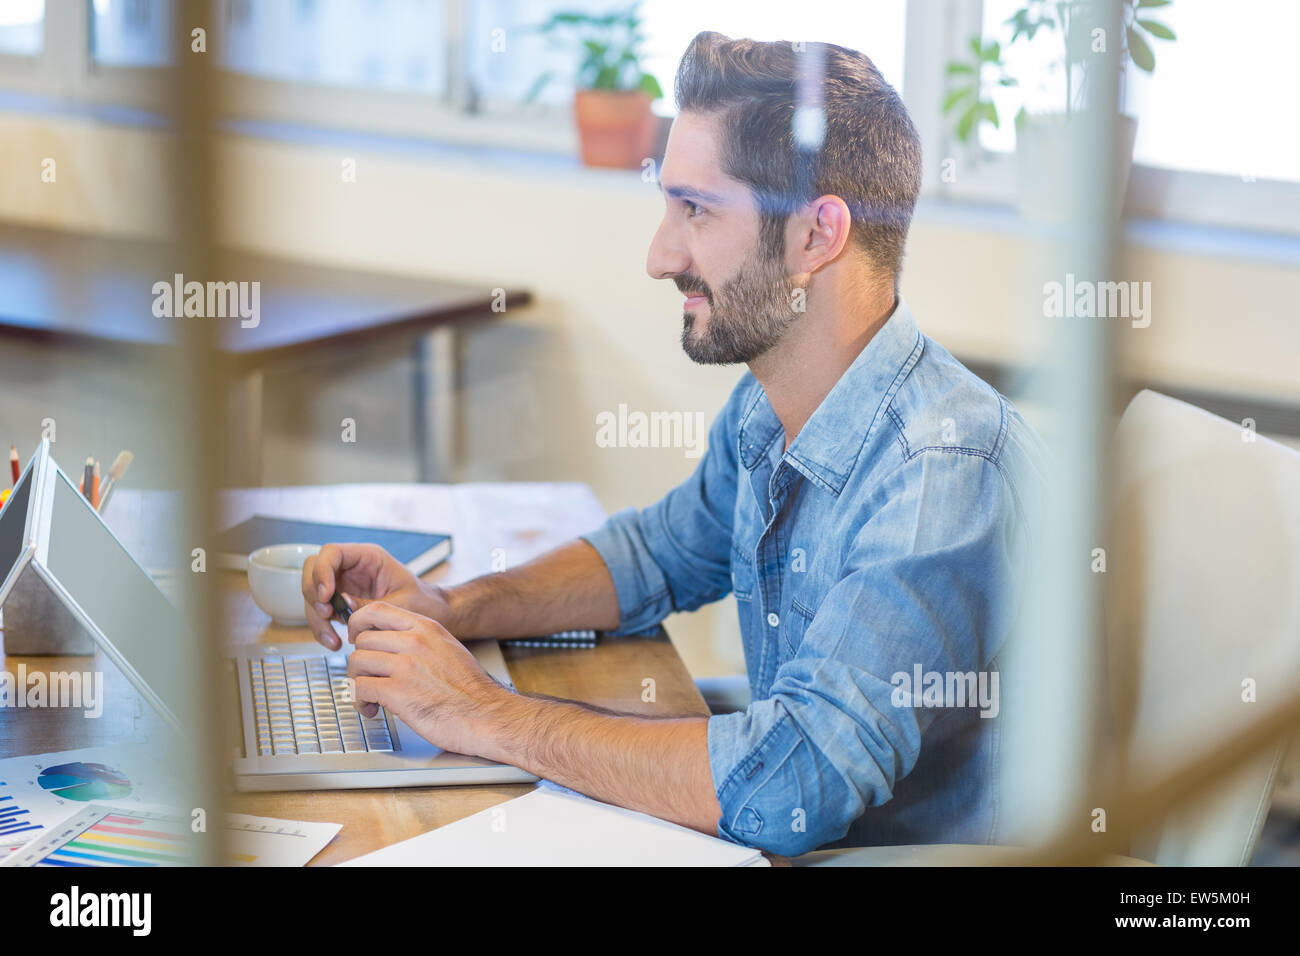 Smiling businessman working on laptop Banque D'Images